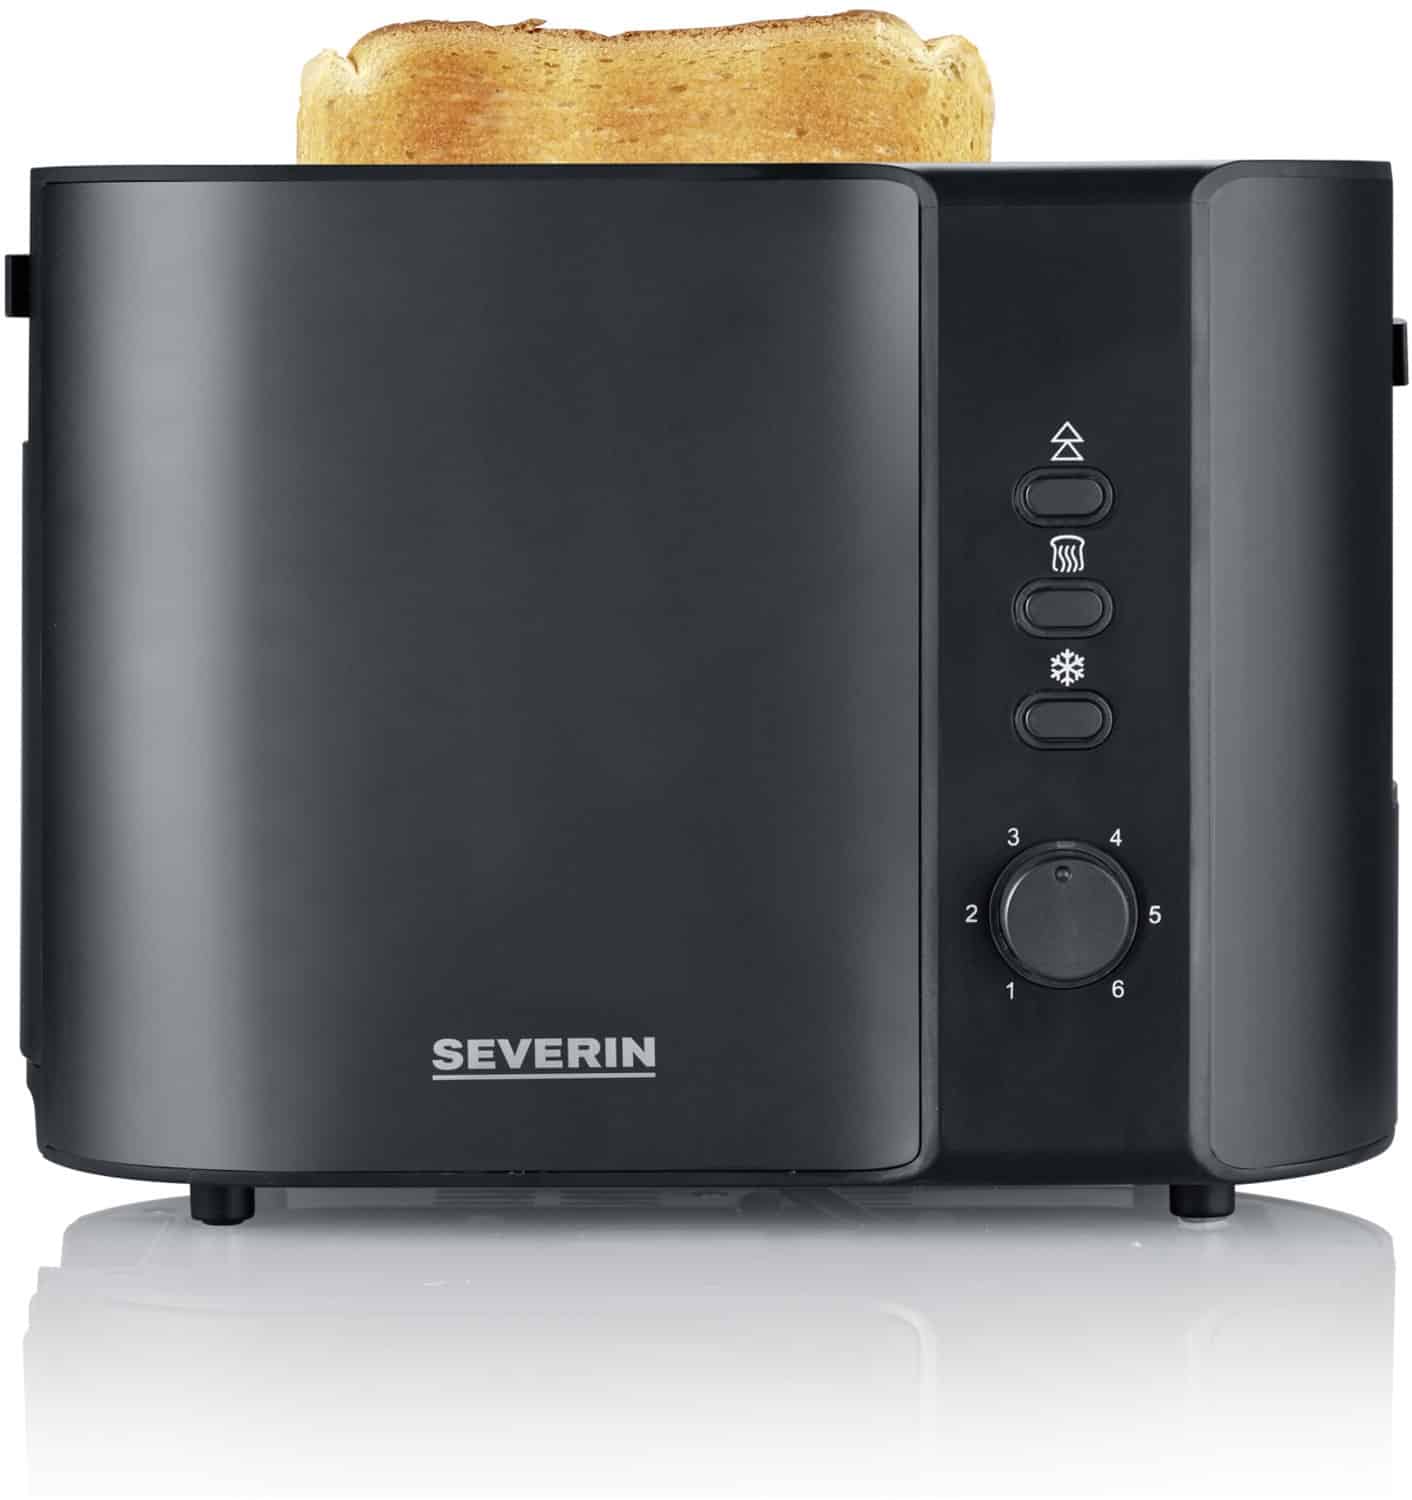 Severin AT 9552 Toaster